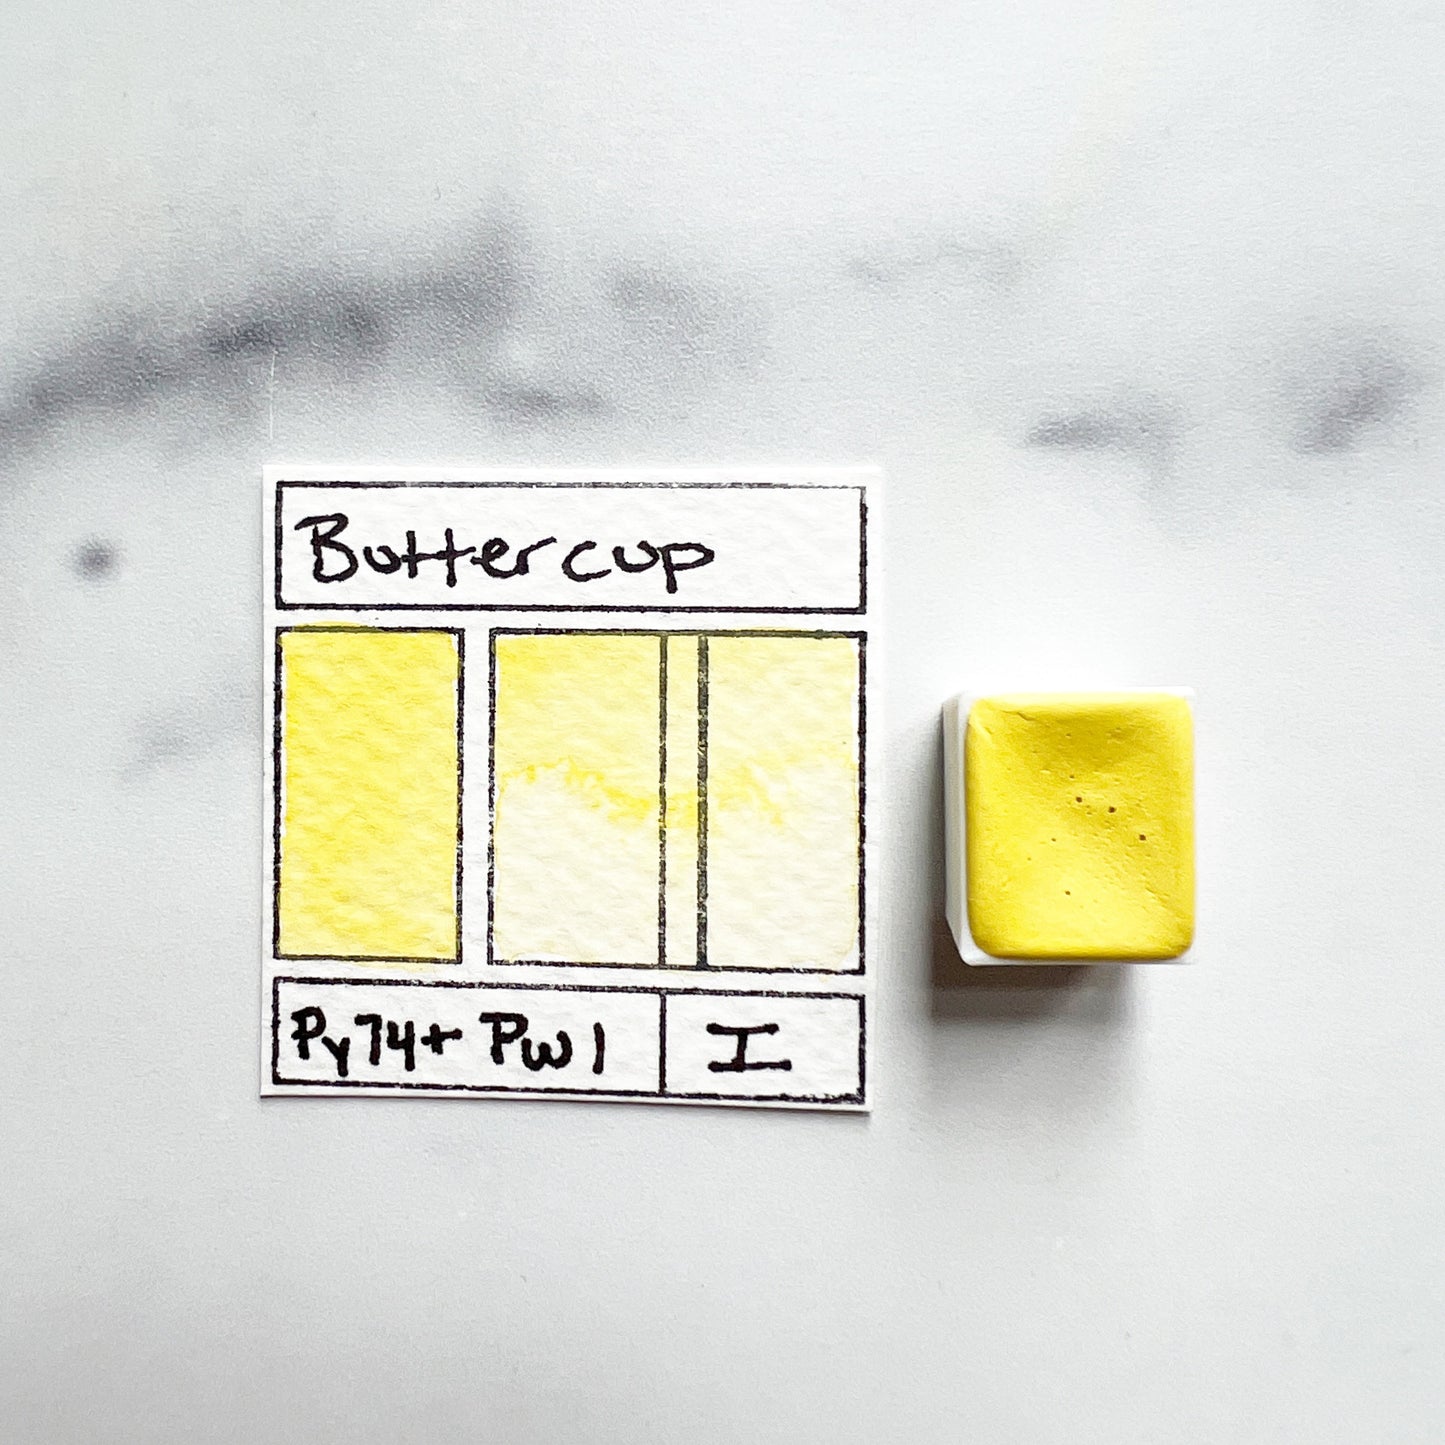 Buttercup. Half pan or bottle cap of handmade watercolor paint